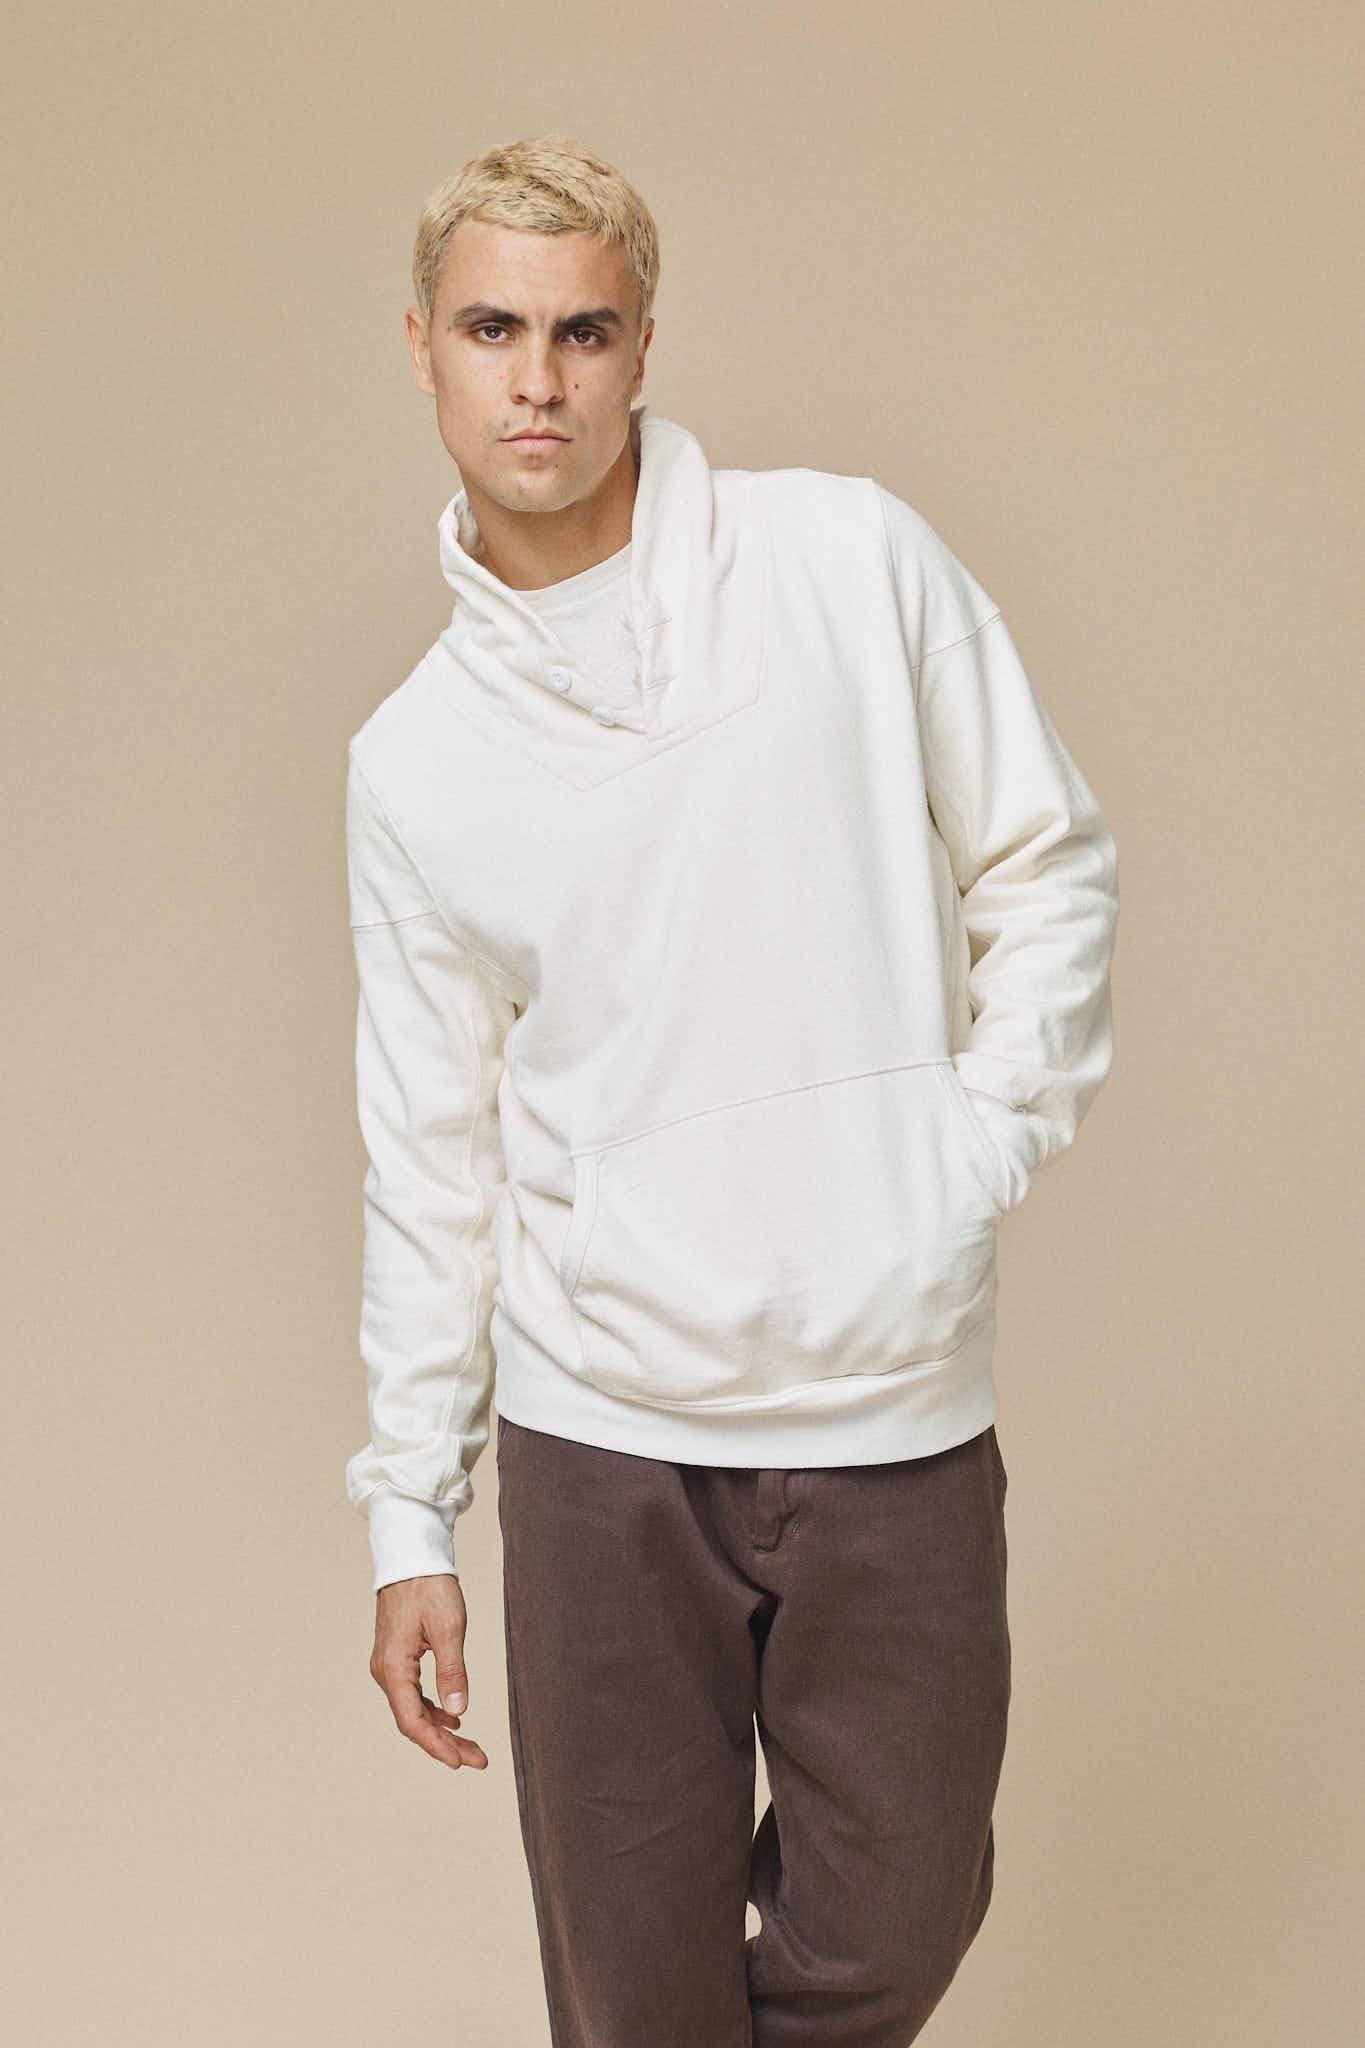 Whittier Sweatshirt | Jungmaven Hemp Clothing & Accessories / model_desc: Shen is 6’2” wearing XL